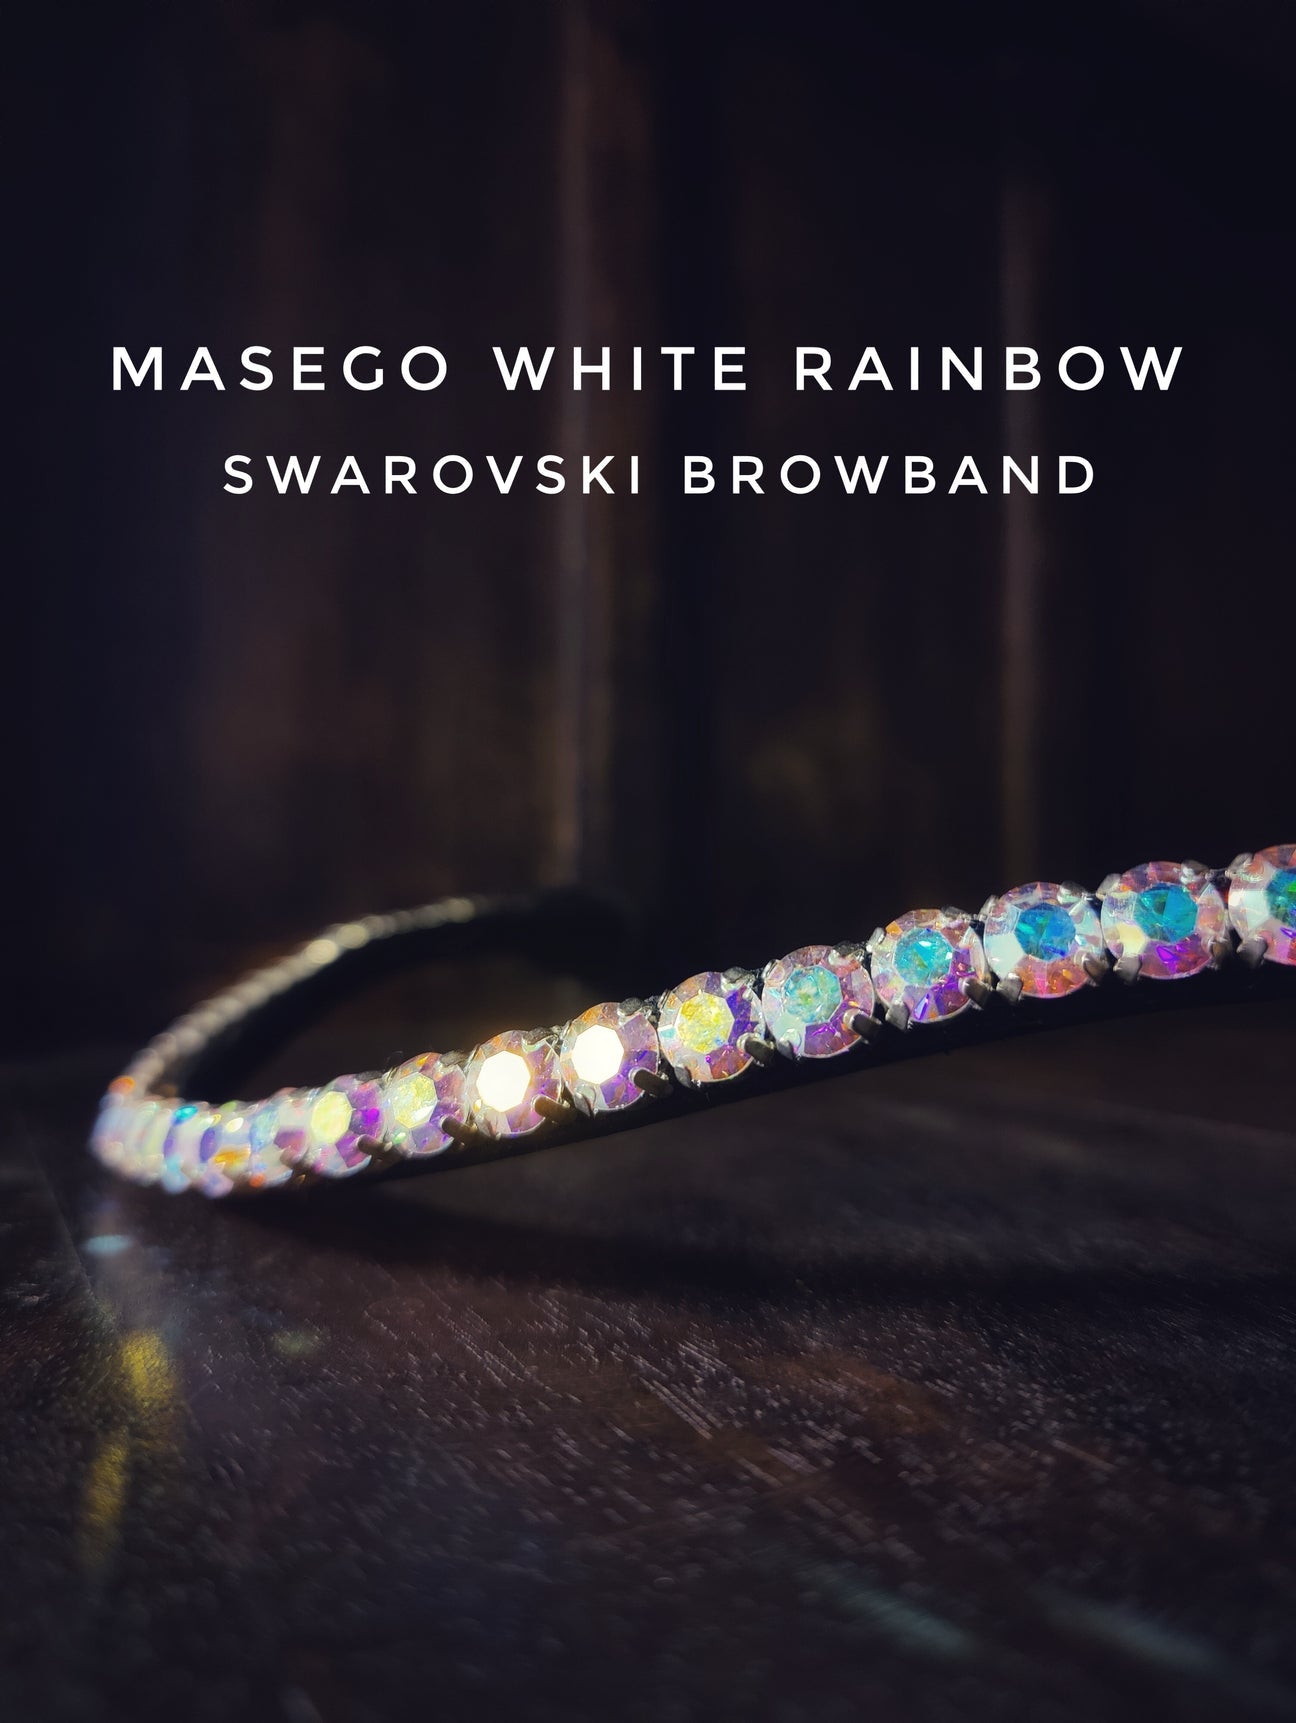 Swarovski Browband "White Rainbow"